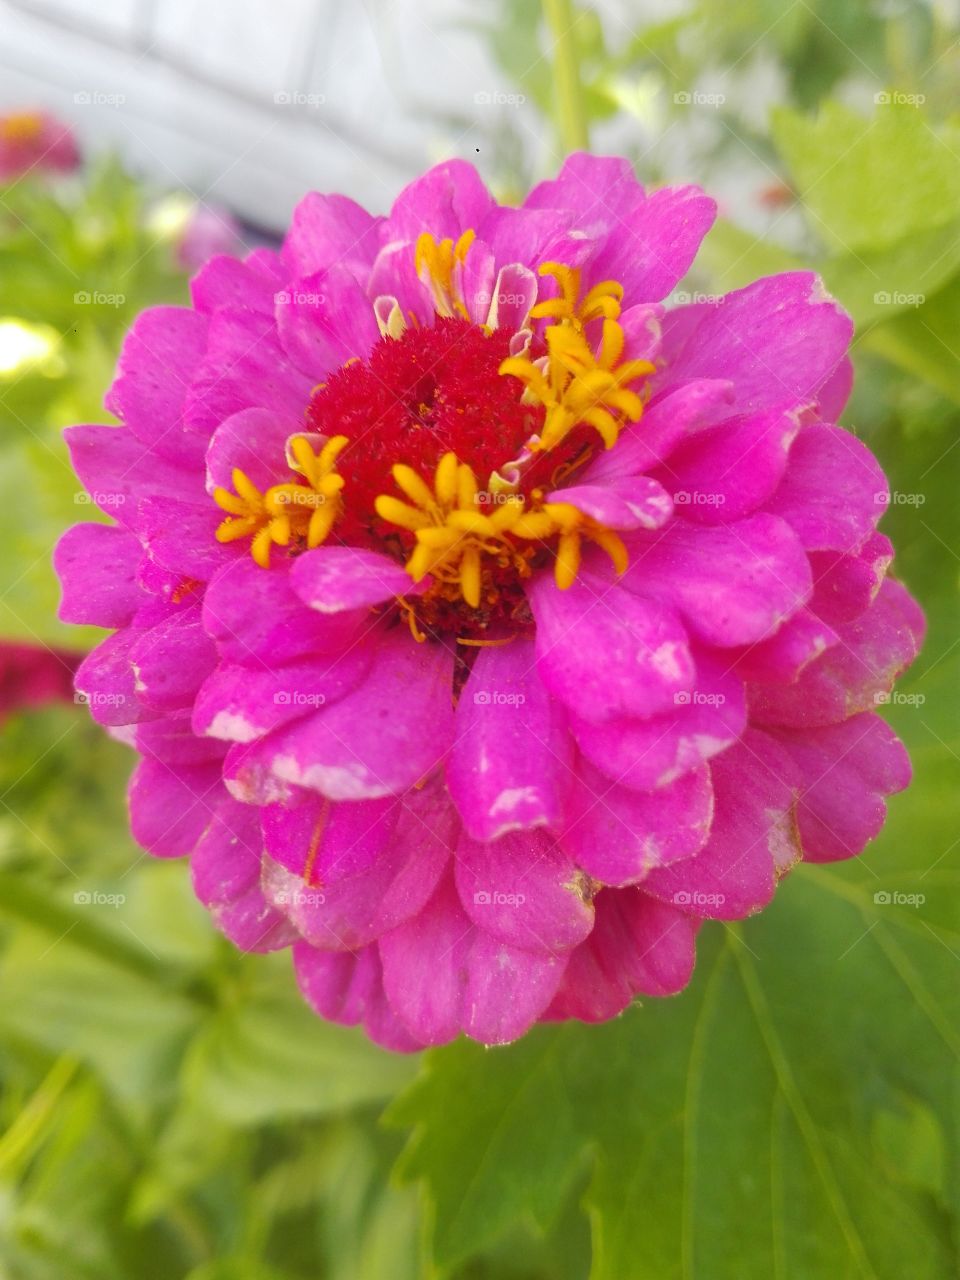 It a flower very beautifull